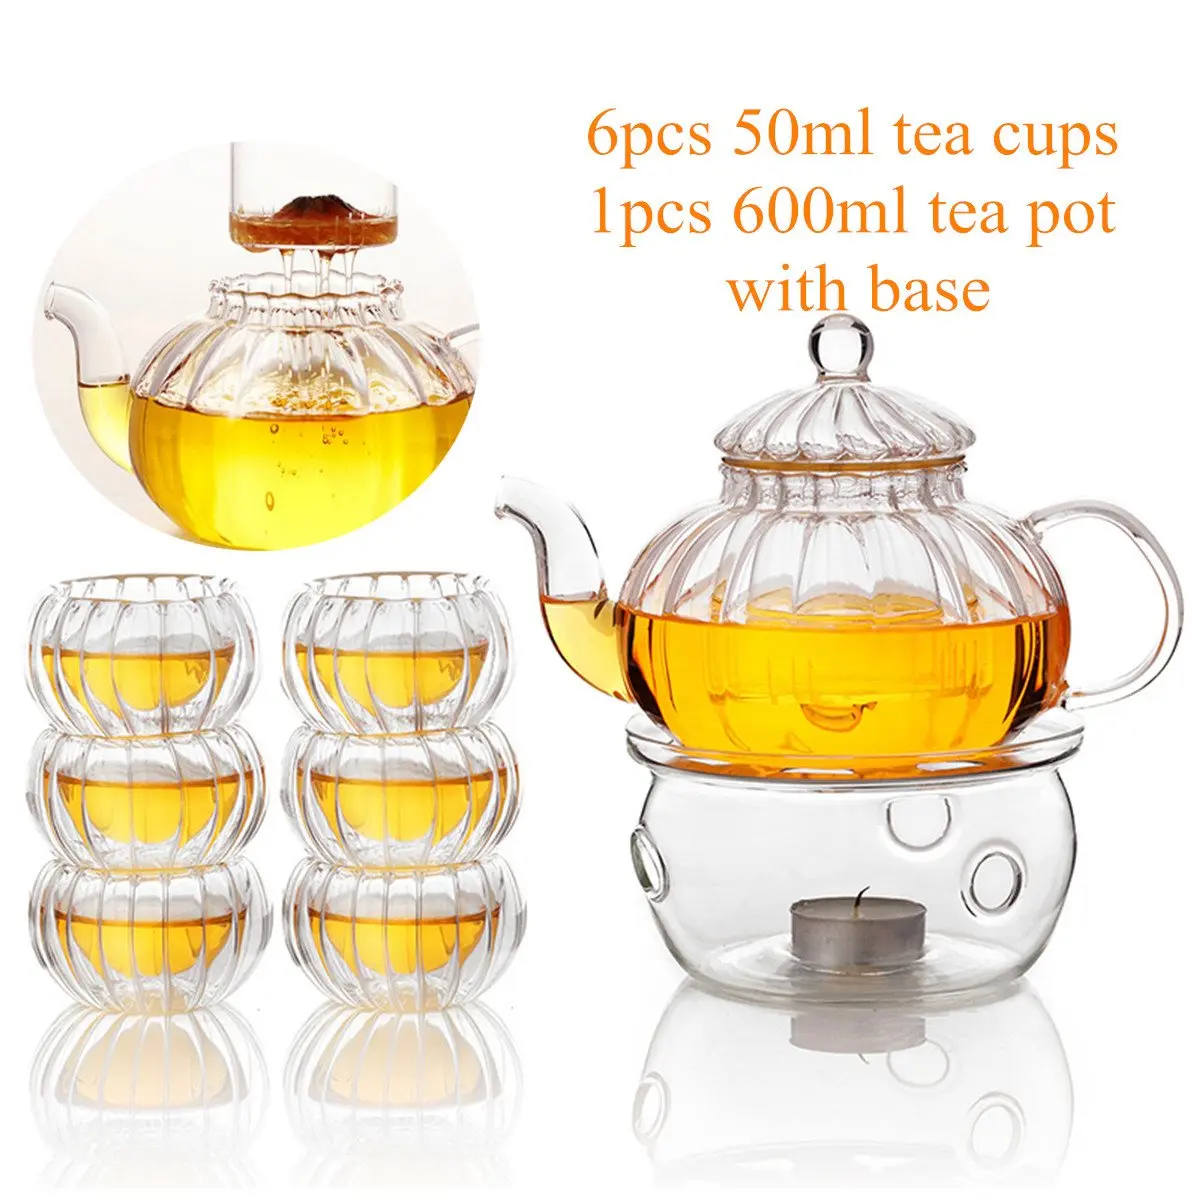 Yellow Classic 6 Cup Ceramic Teapot: Teapots